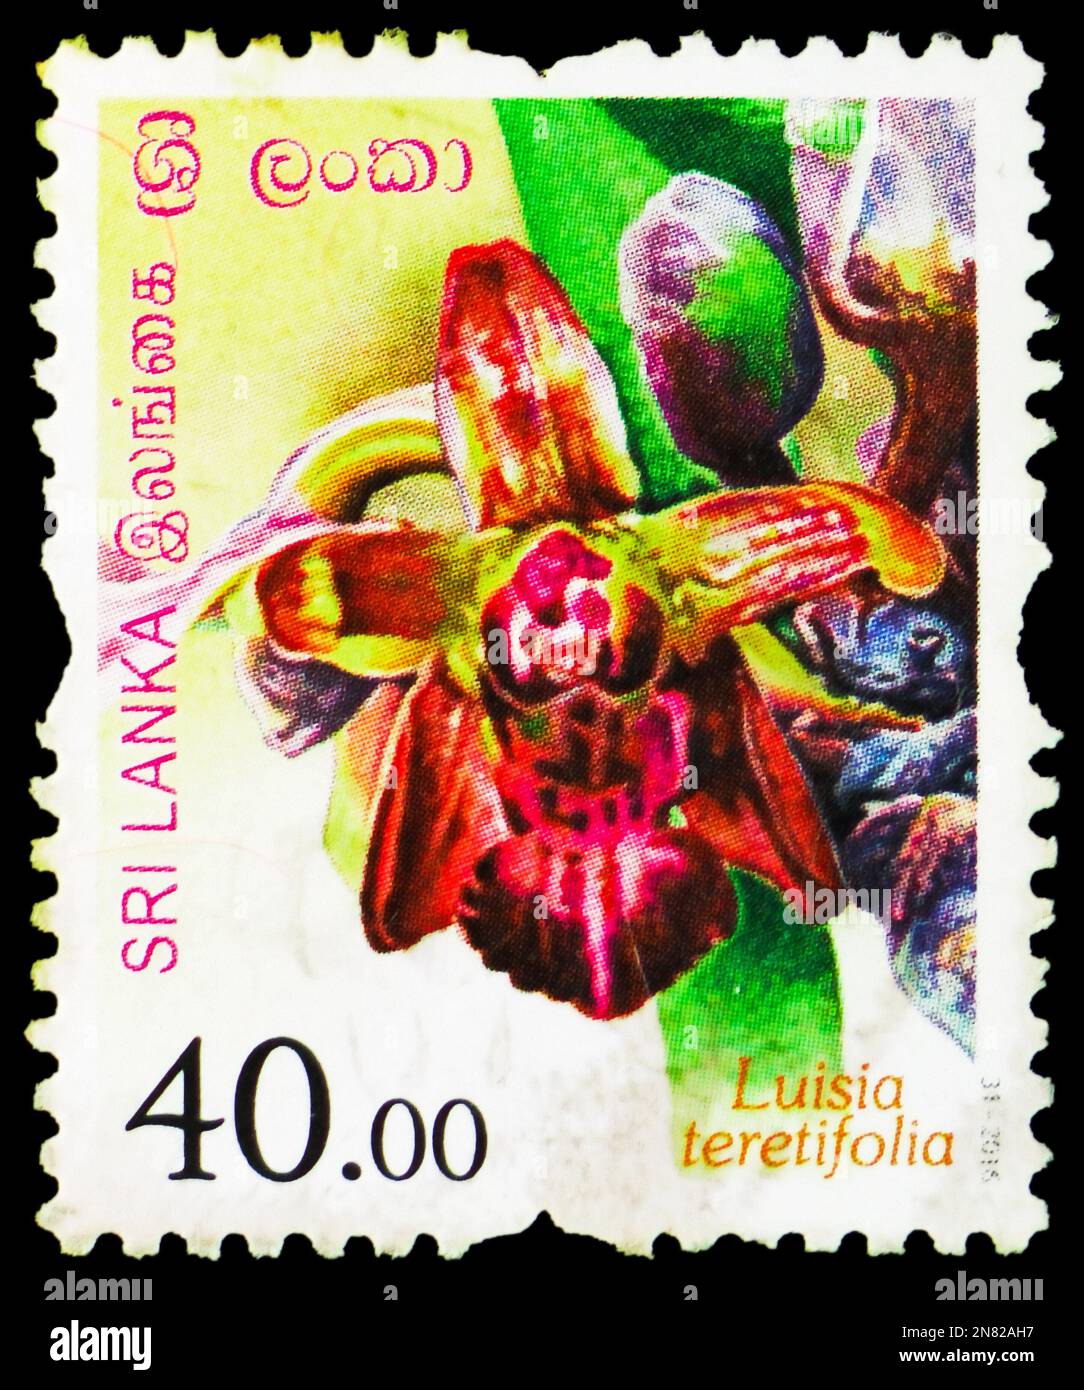 MOSCOW, RUSSIA - FEBRUARY 4, 2023: Postage stamp printed in Sri Lanka shows Luisia teretifolia, Flowers of Sri Lanka serie, circa 2016 Stock Photo